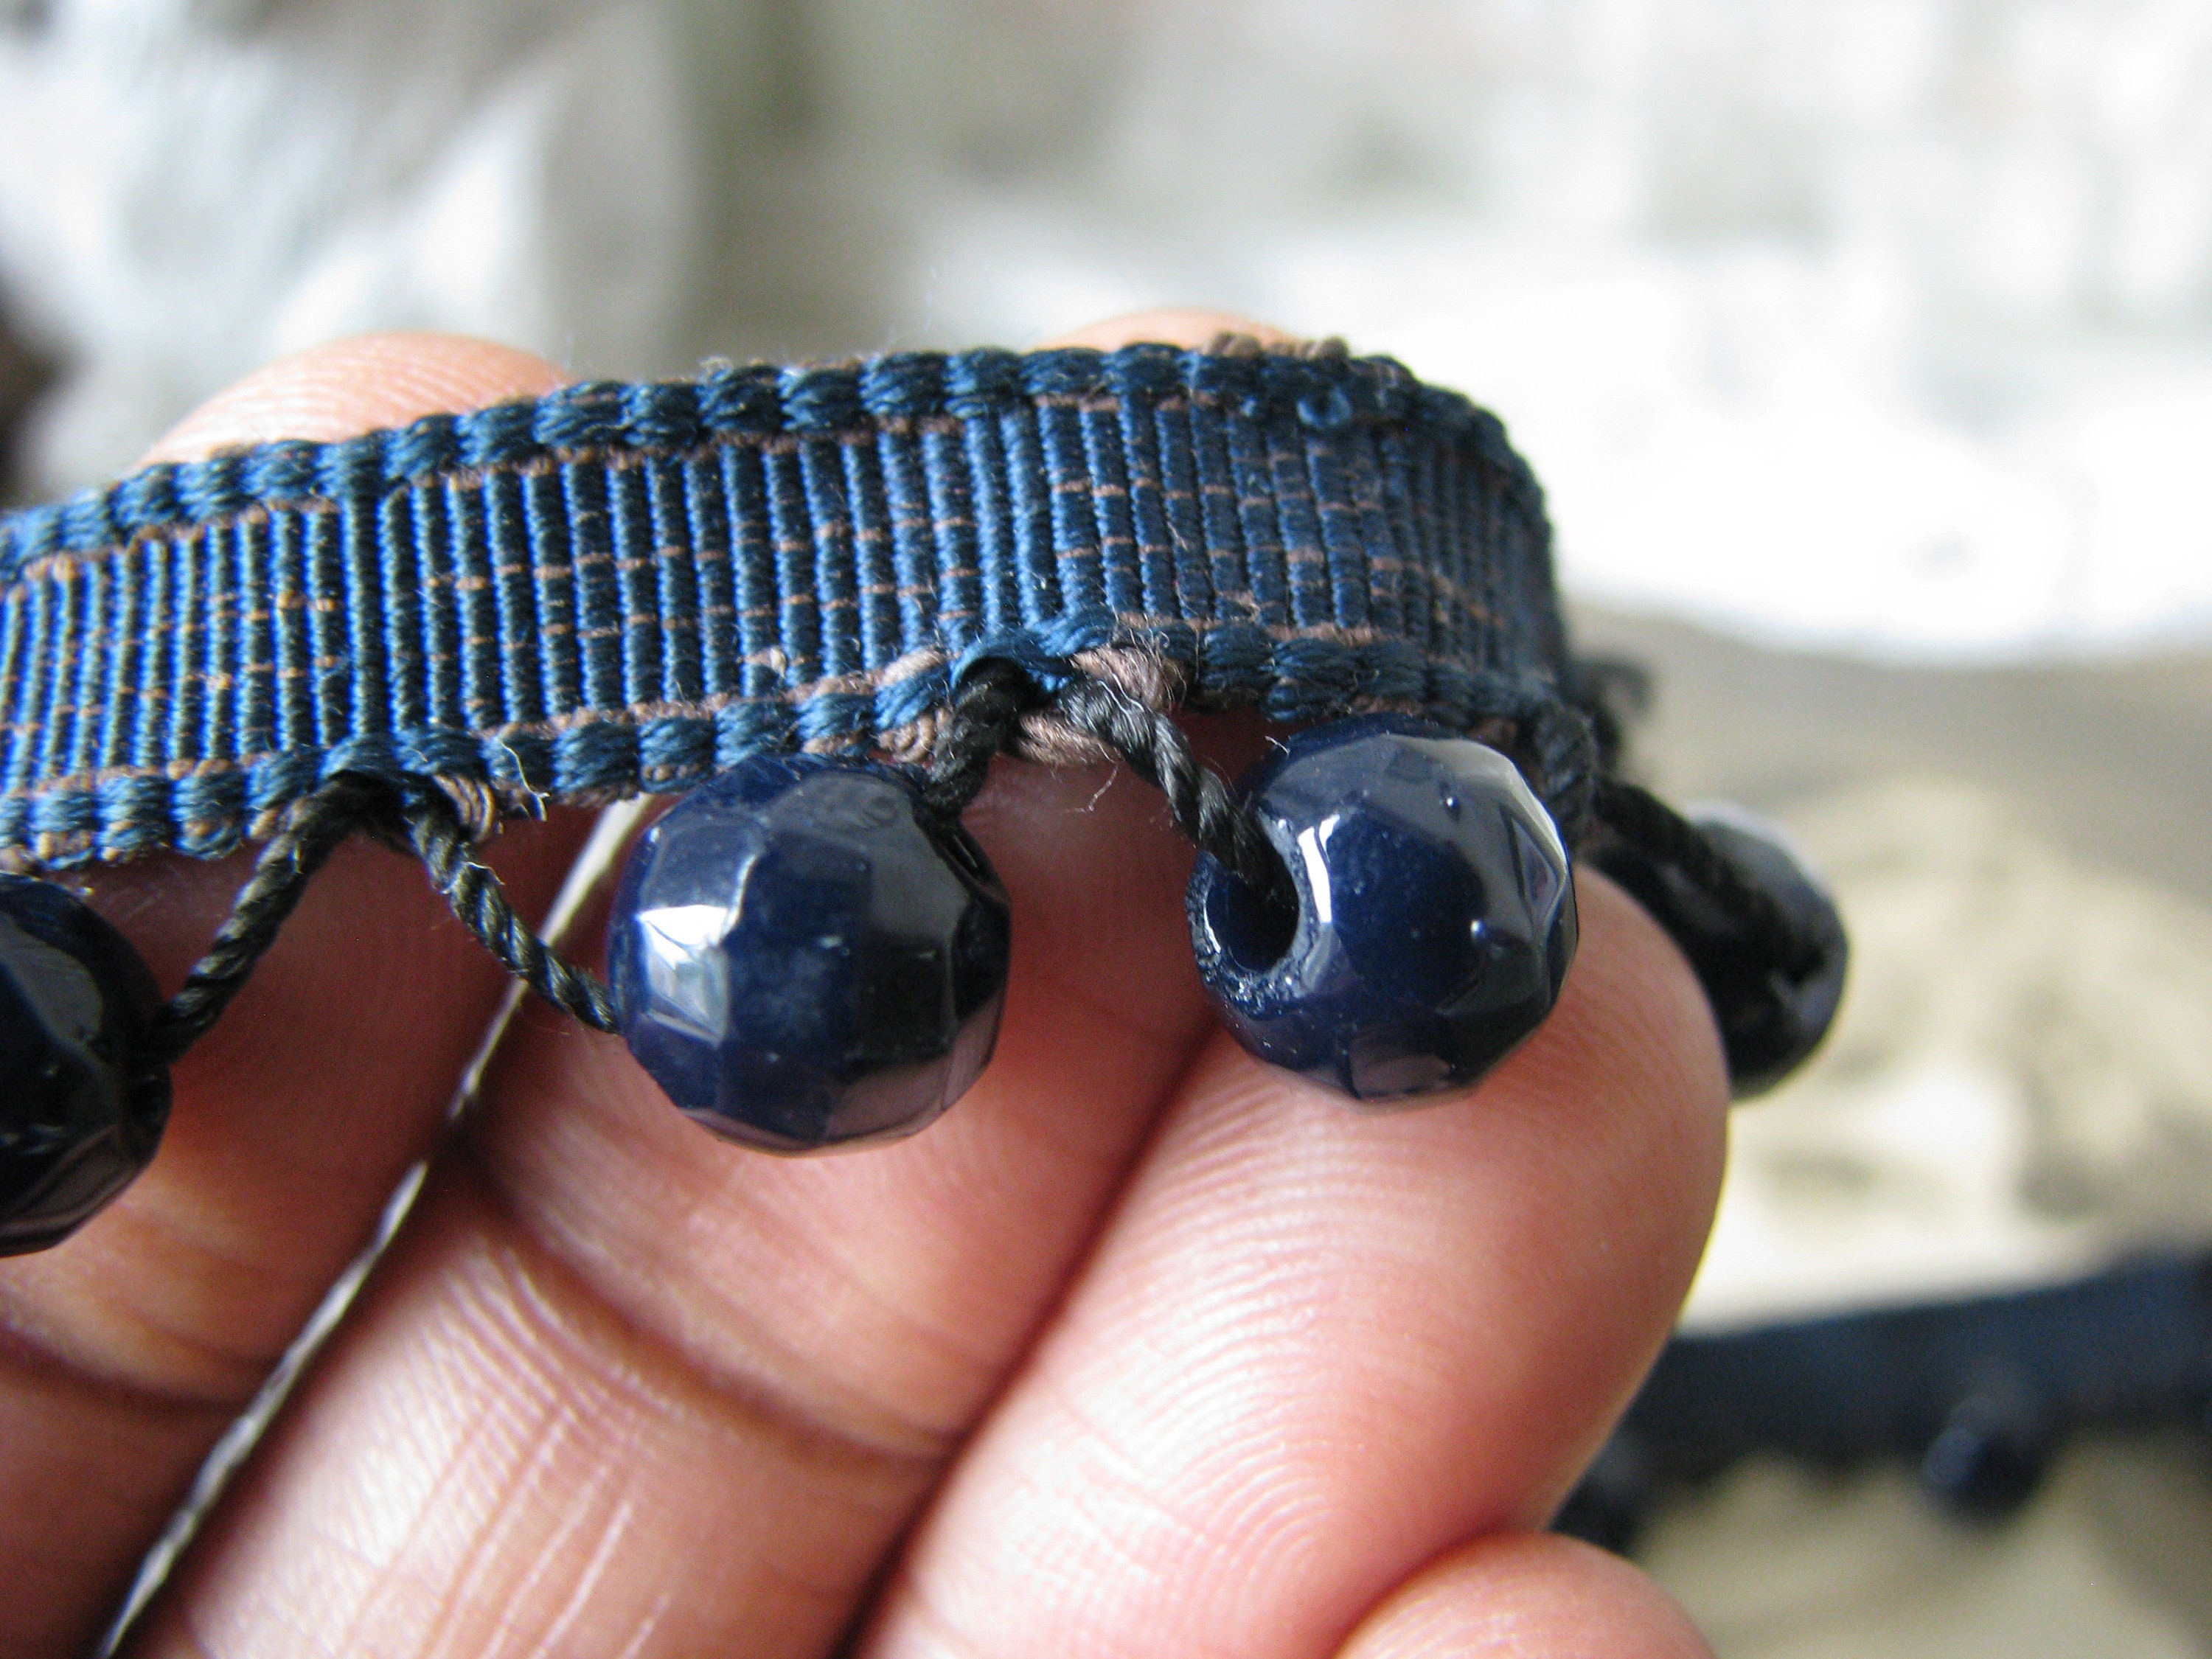 Antique Glass Nailhead Beads - TSP Cobalt Blue 4mm Round